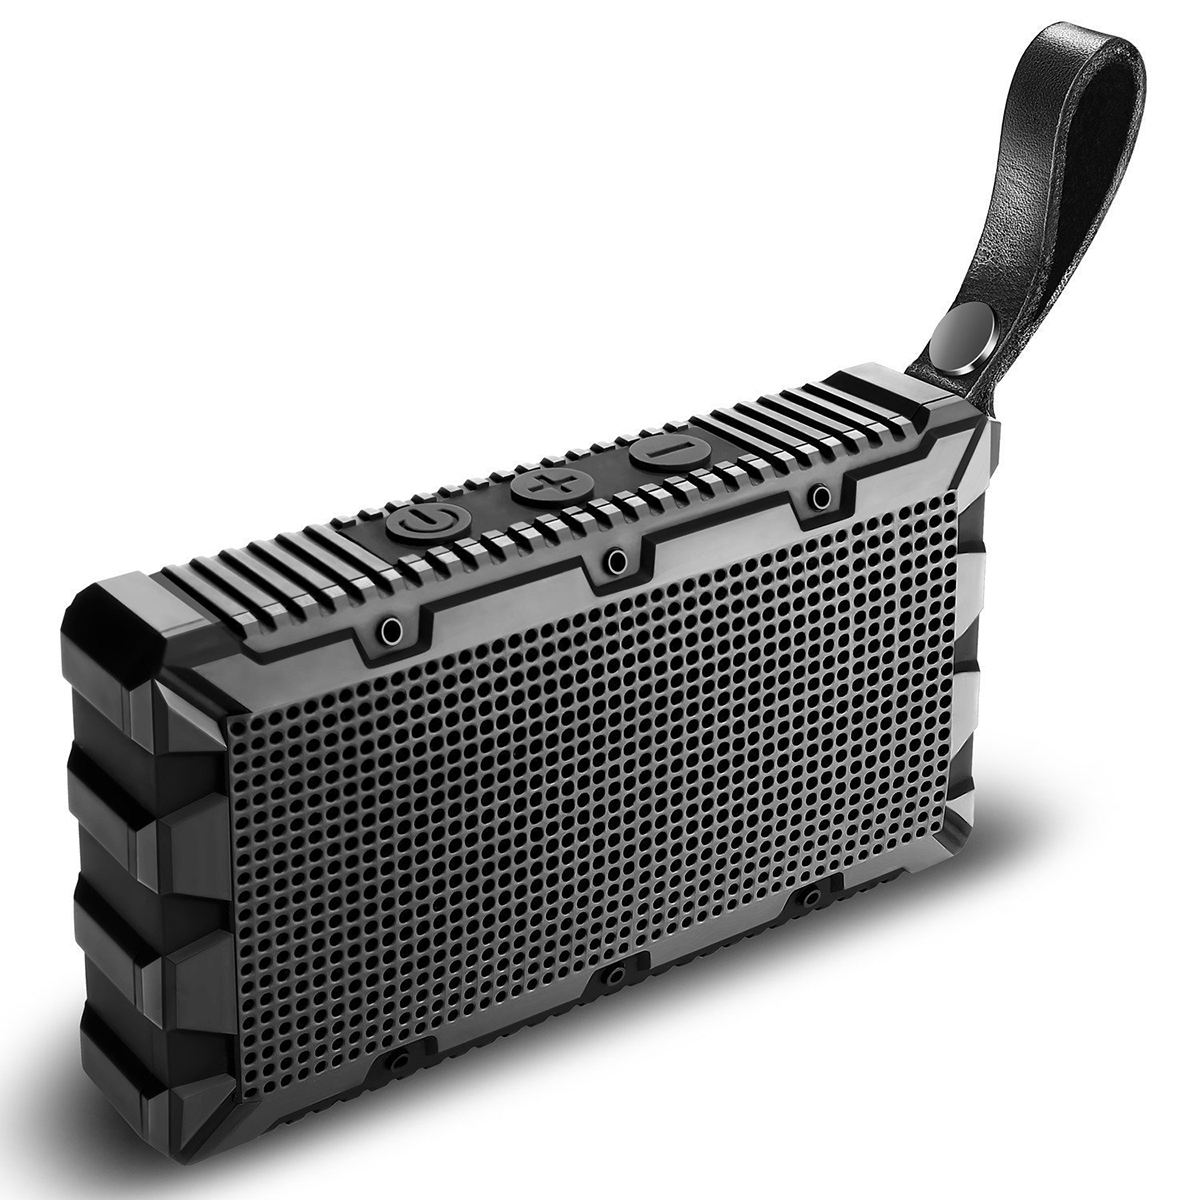 

Portable Wireless bluetooth Speaker IP67 Waterproof Dustproof Stereo Outdoors Speakers with Strap